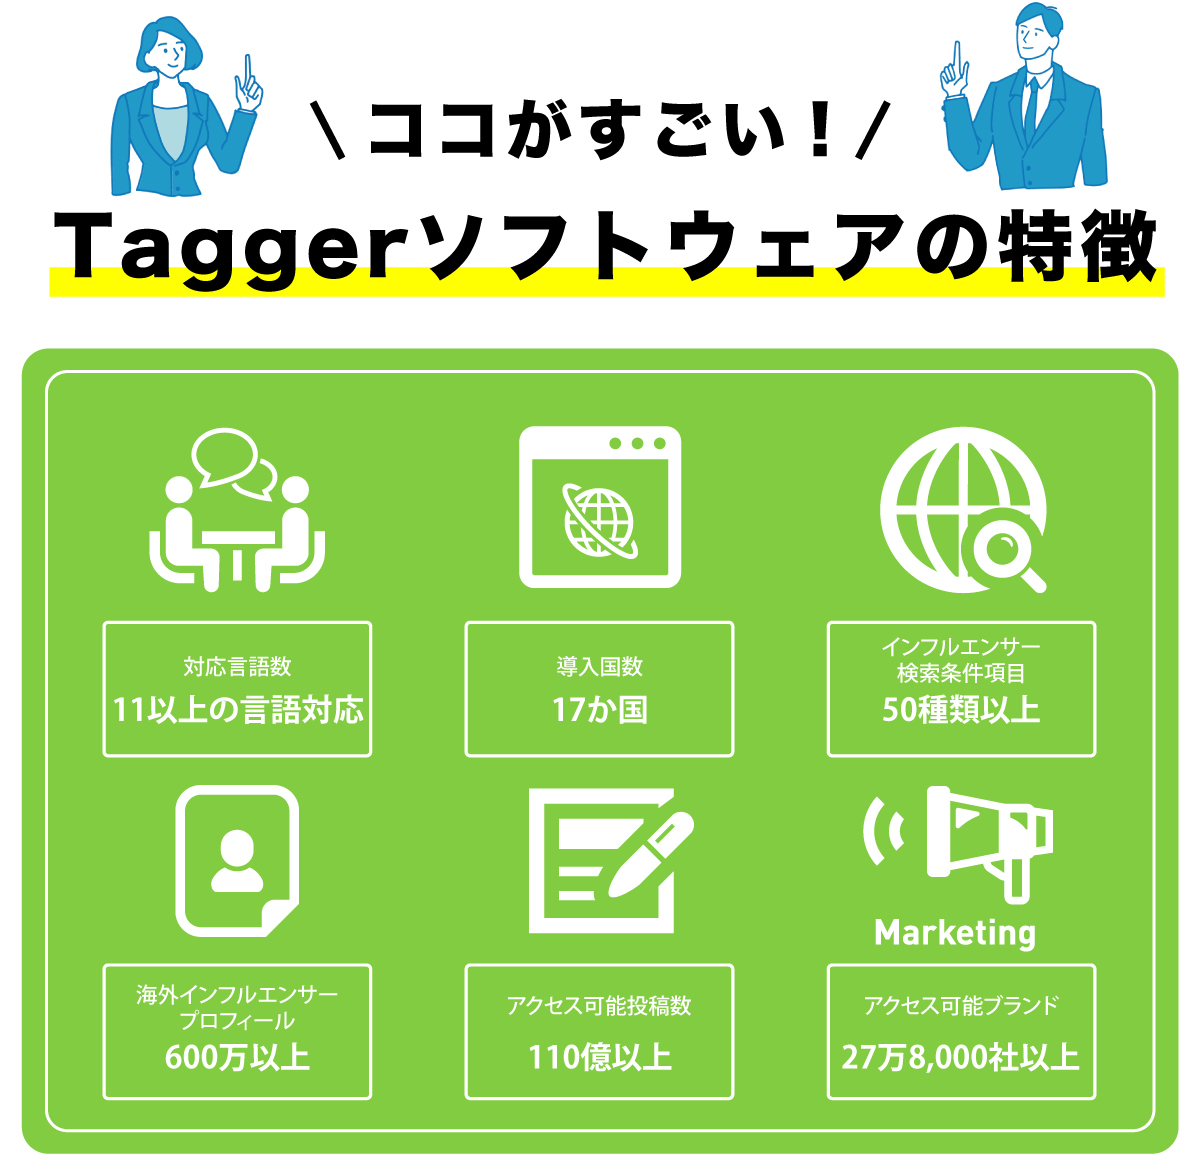 Taggerソフトウェアの実績-6つのポイント-